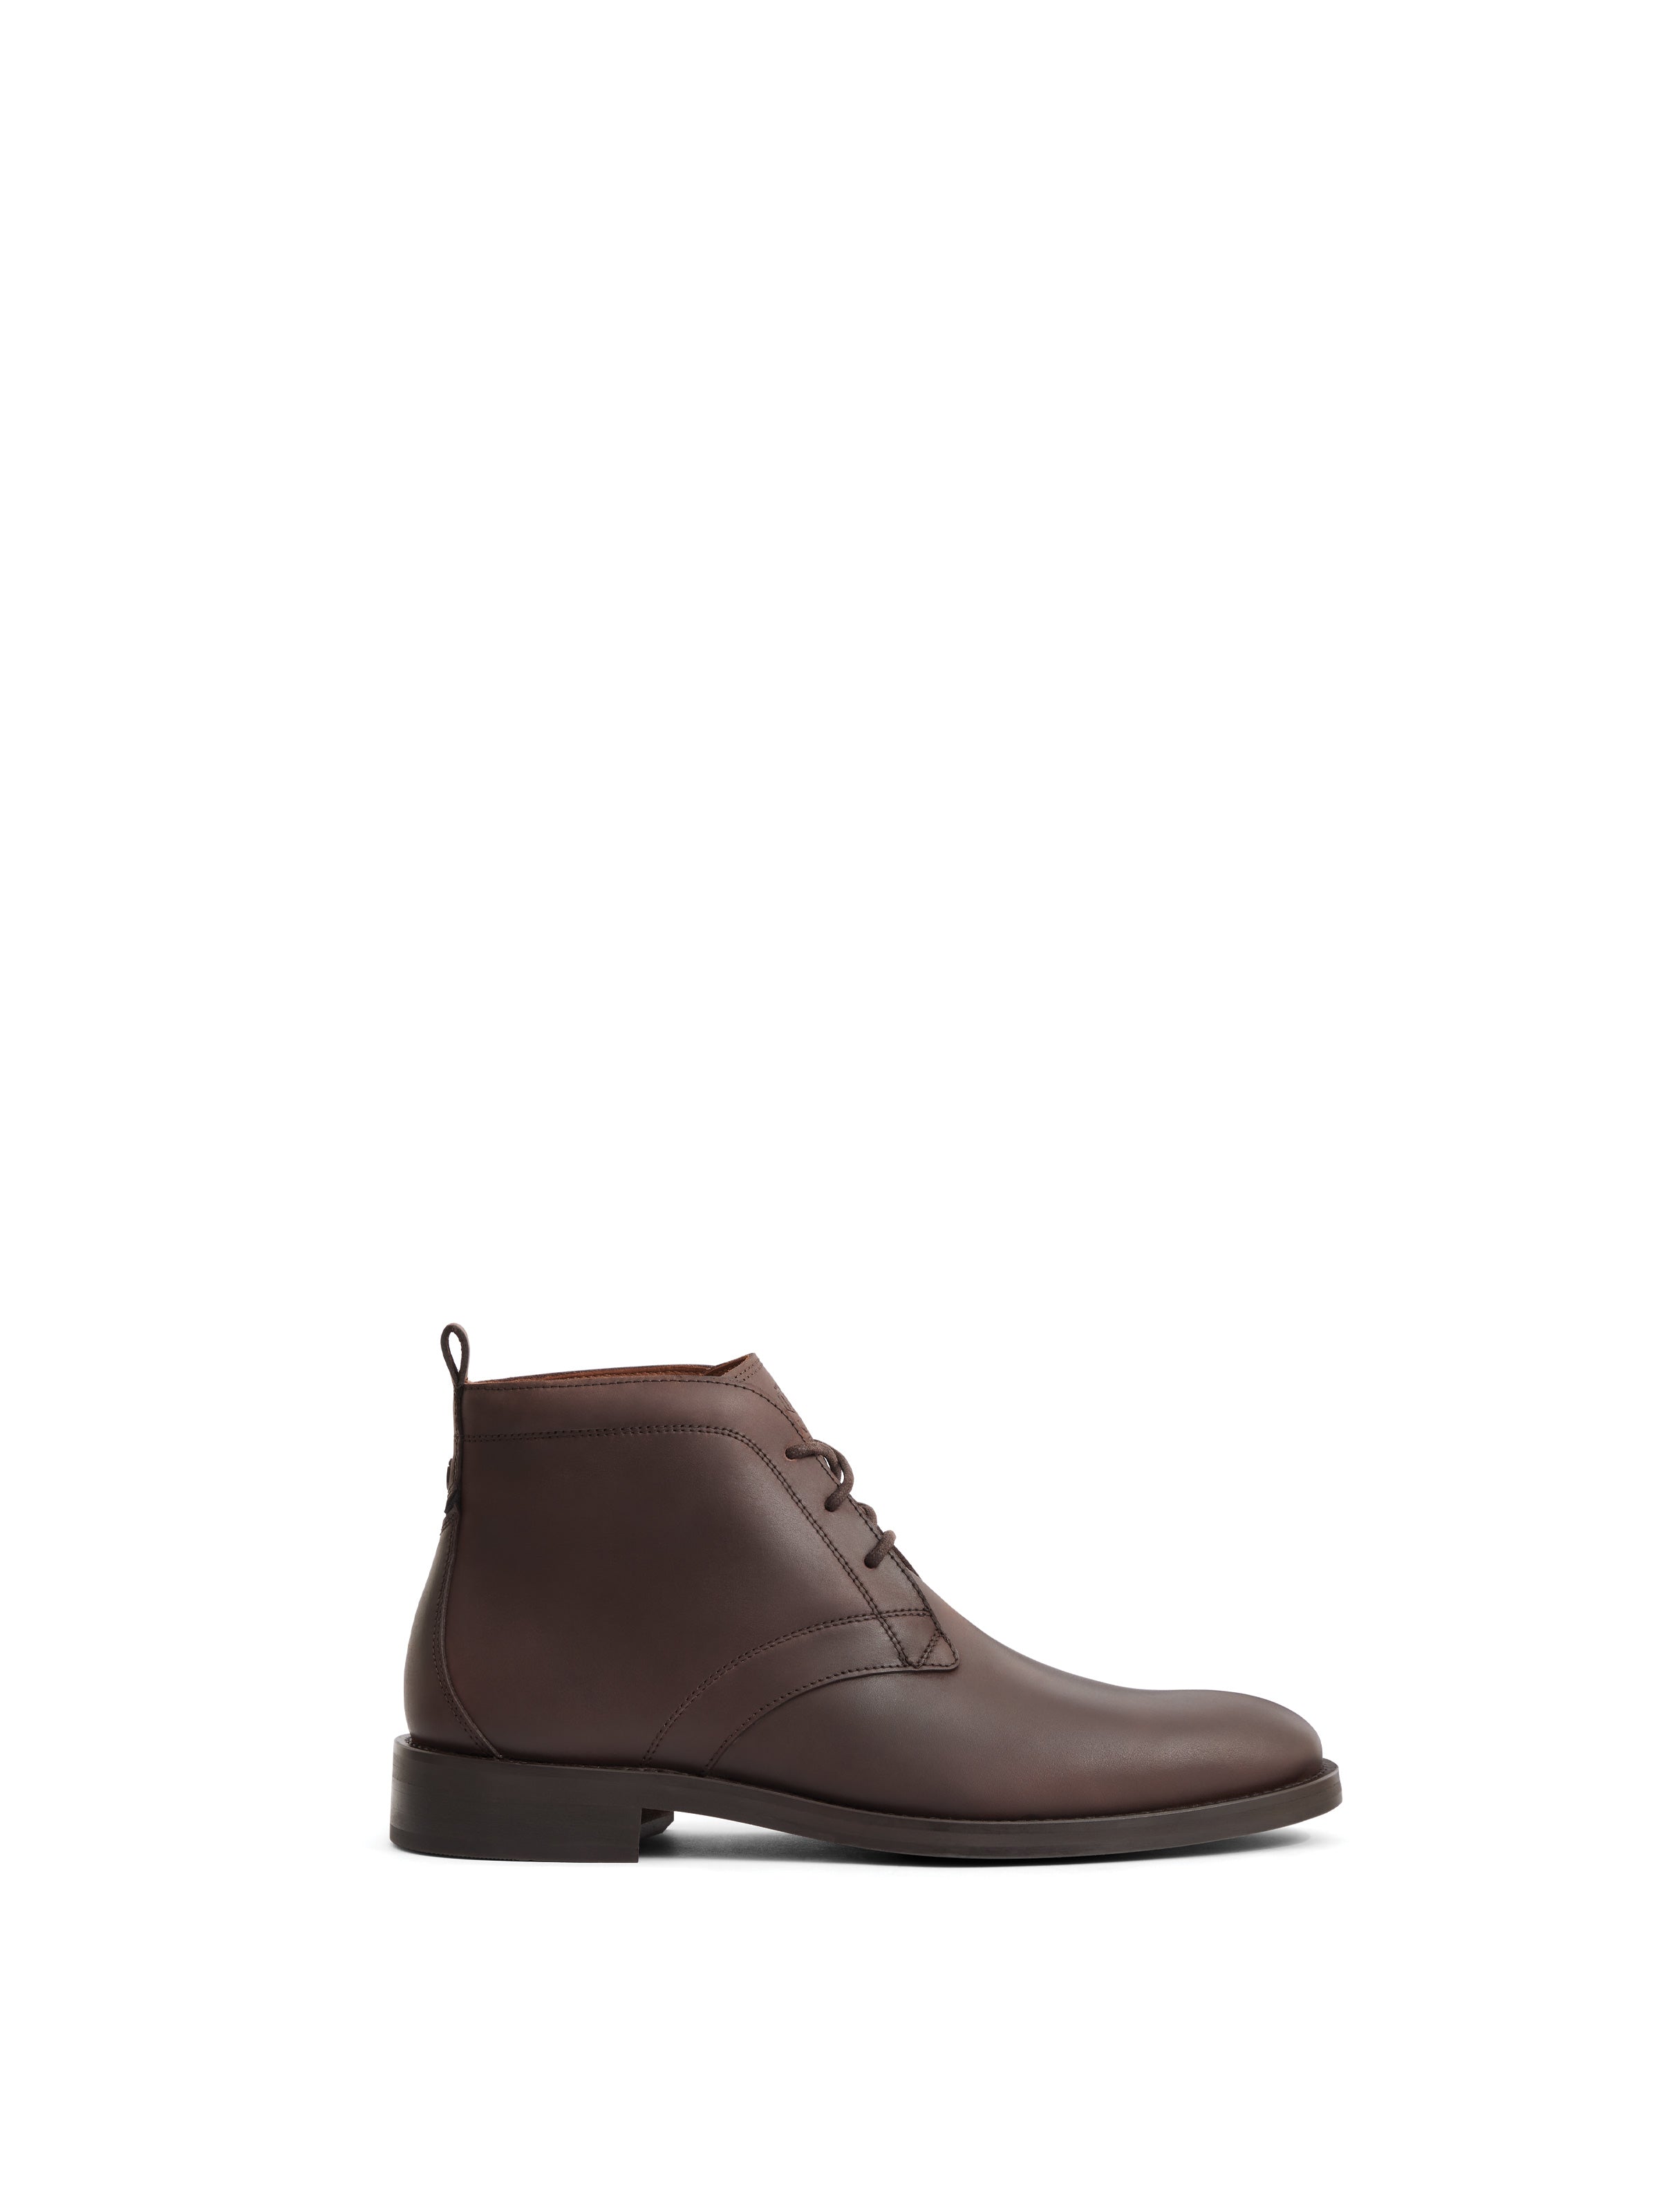 Malvern - Men's Ankle Boot - Mahogany Leather | Fairfax & Favor